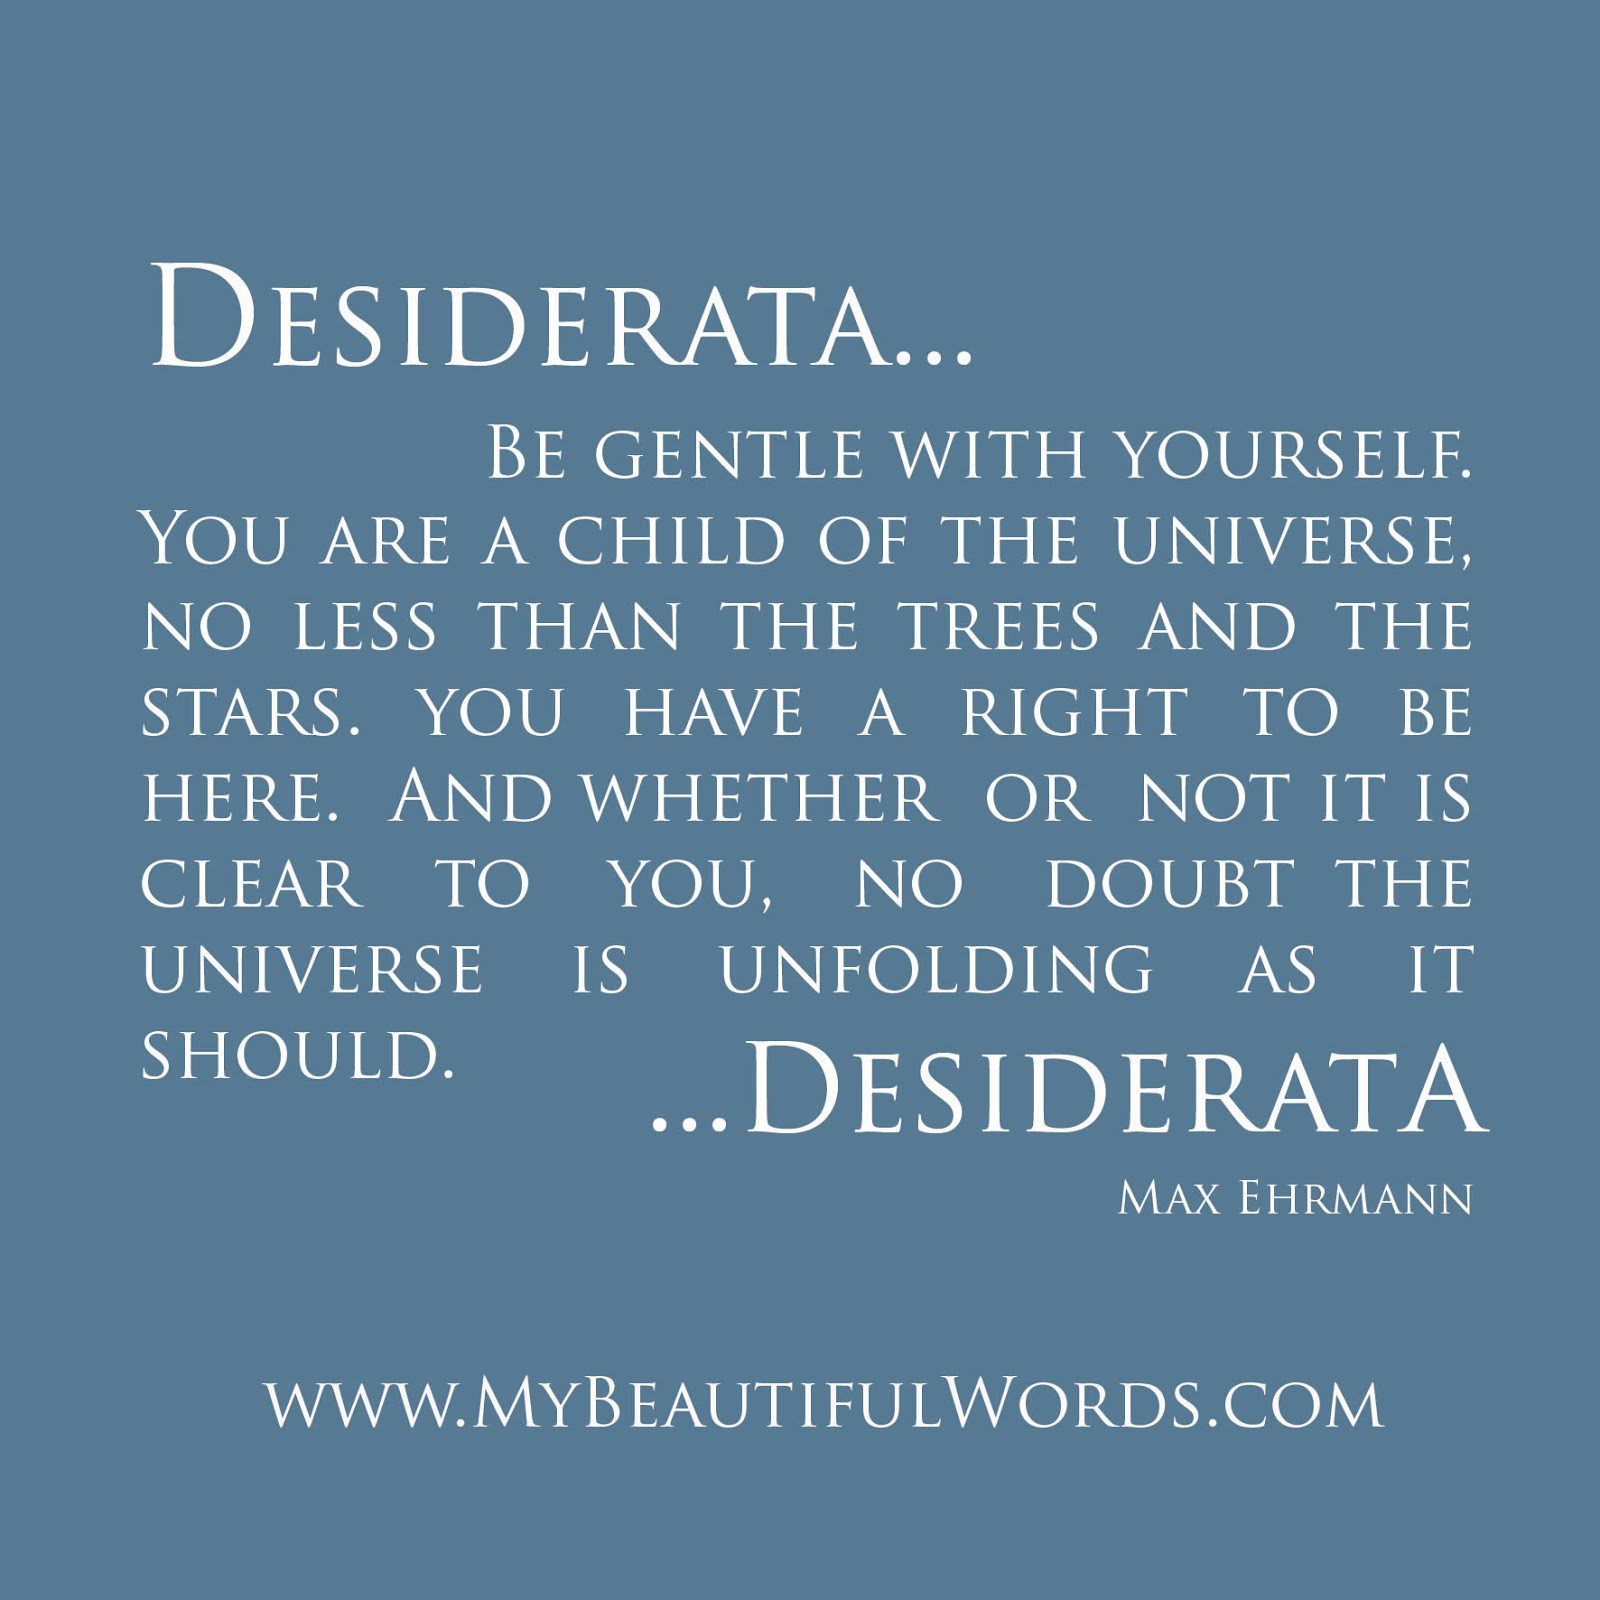 You Are A Child Of The Universe Quote
 My Beautiful Words Desiderata Desiderata